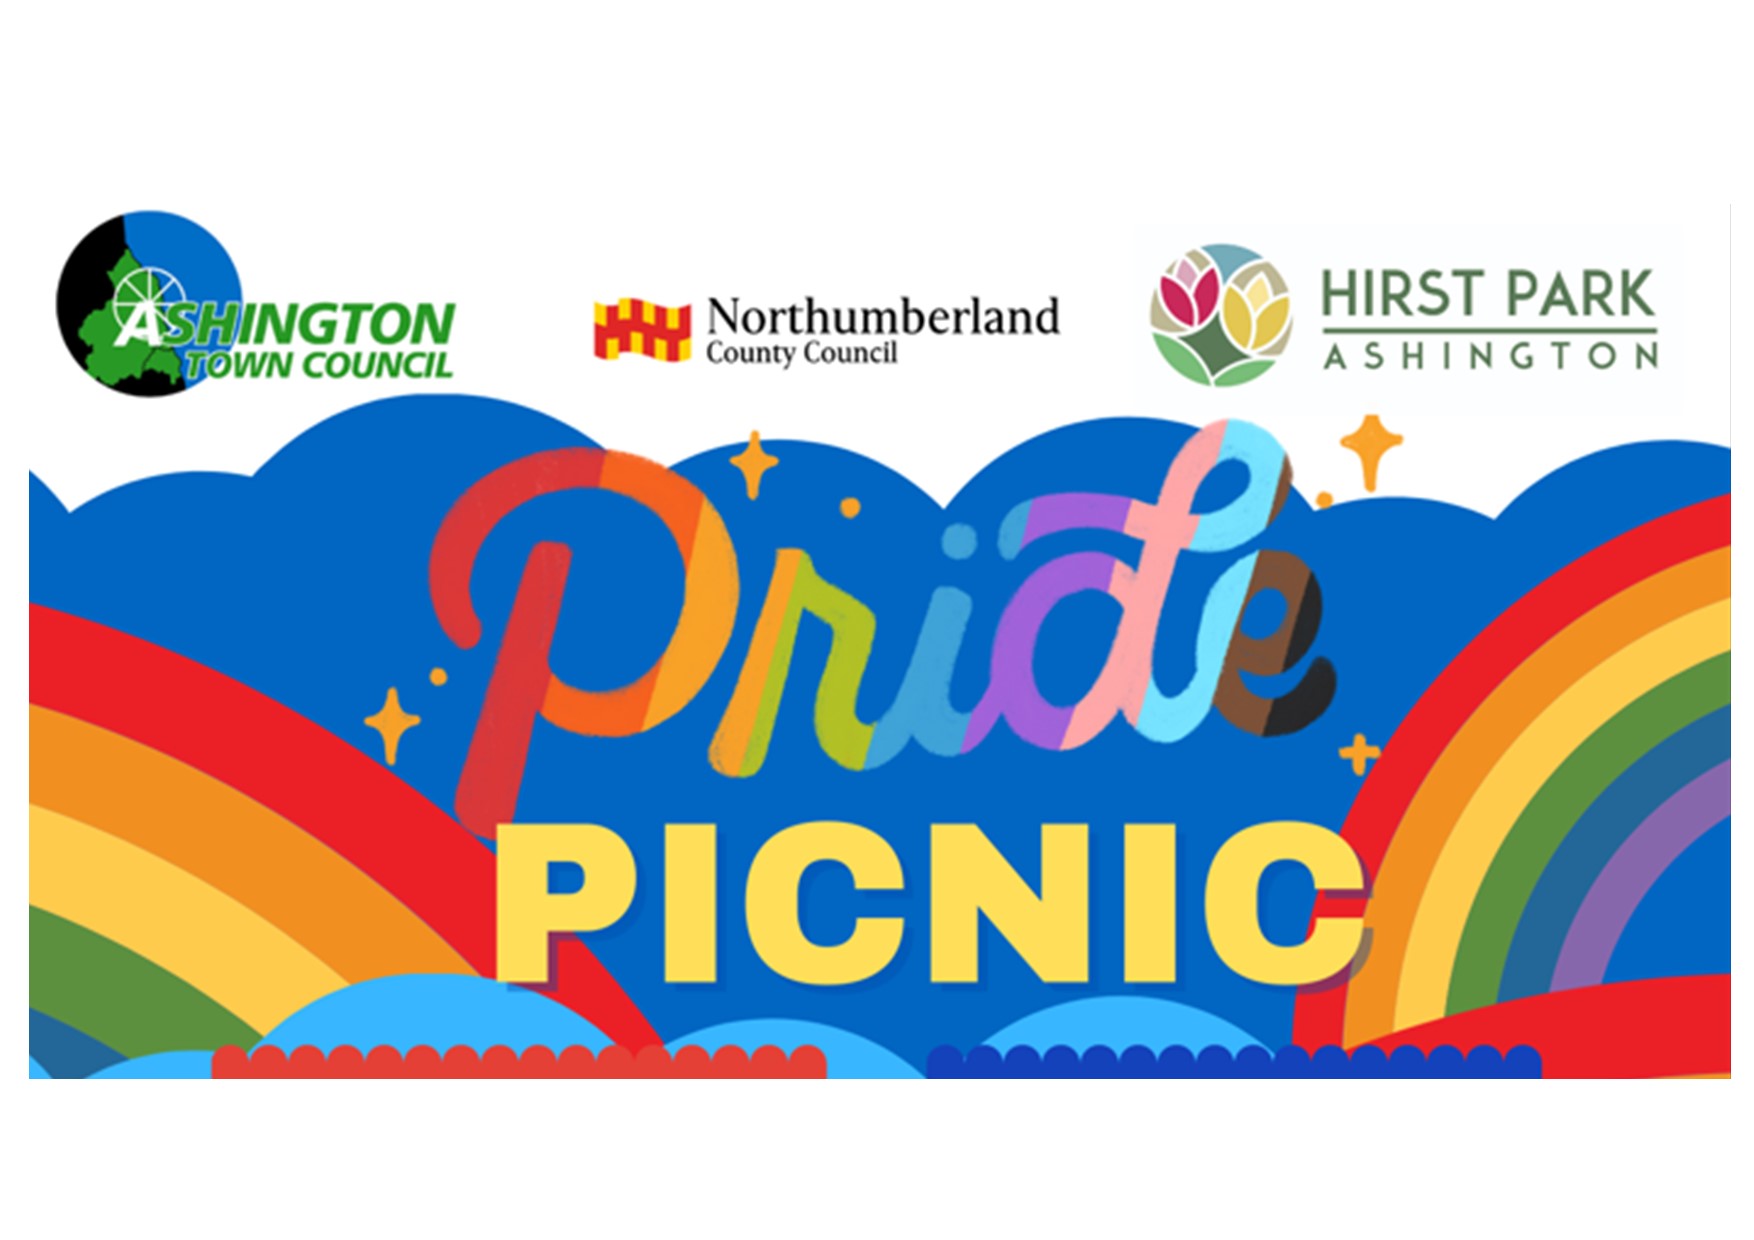 Pride Picnic in Hirst Park on Saturday